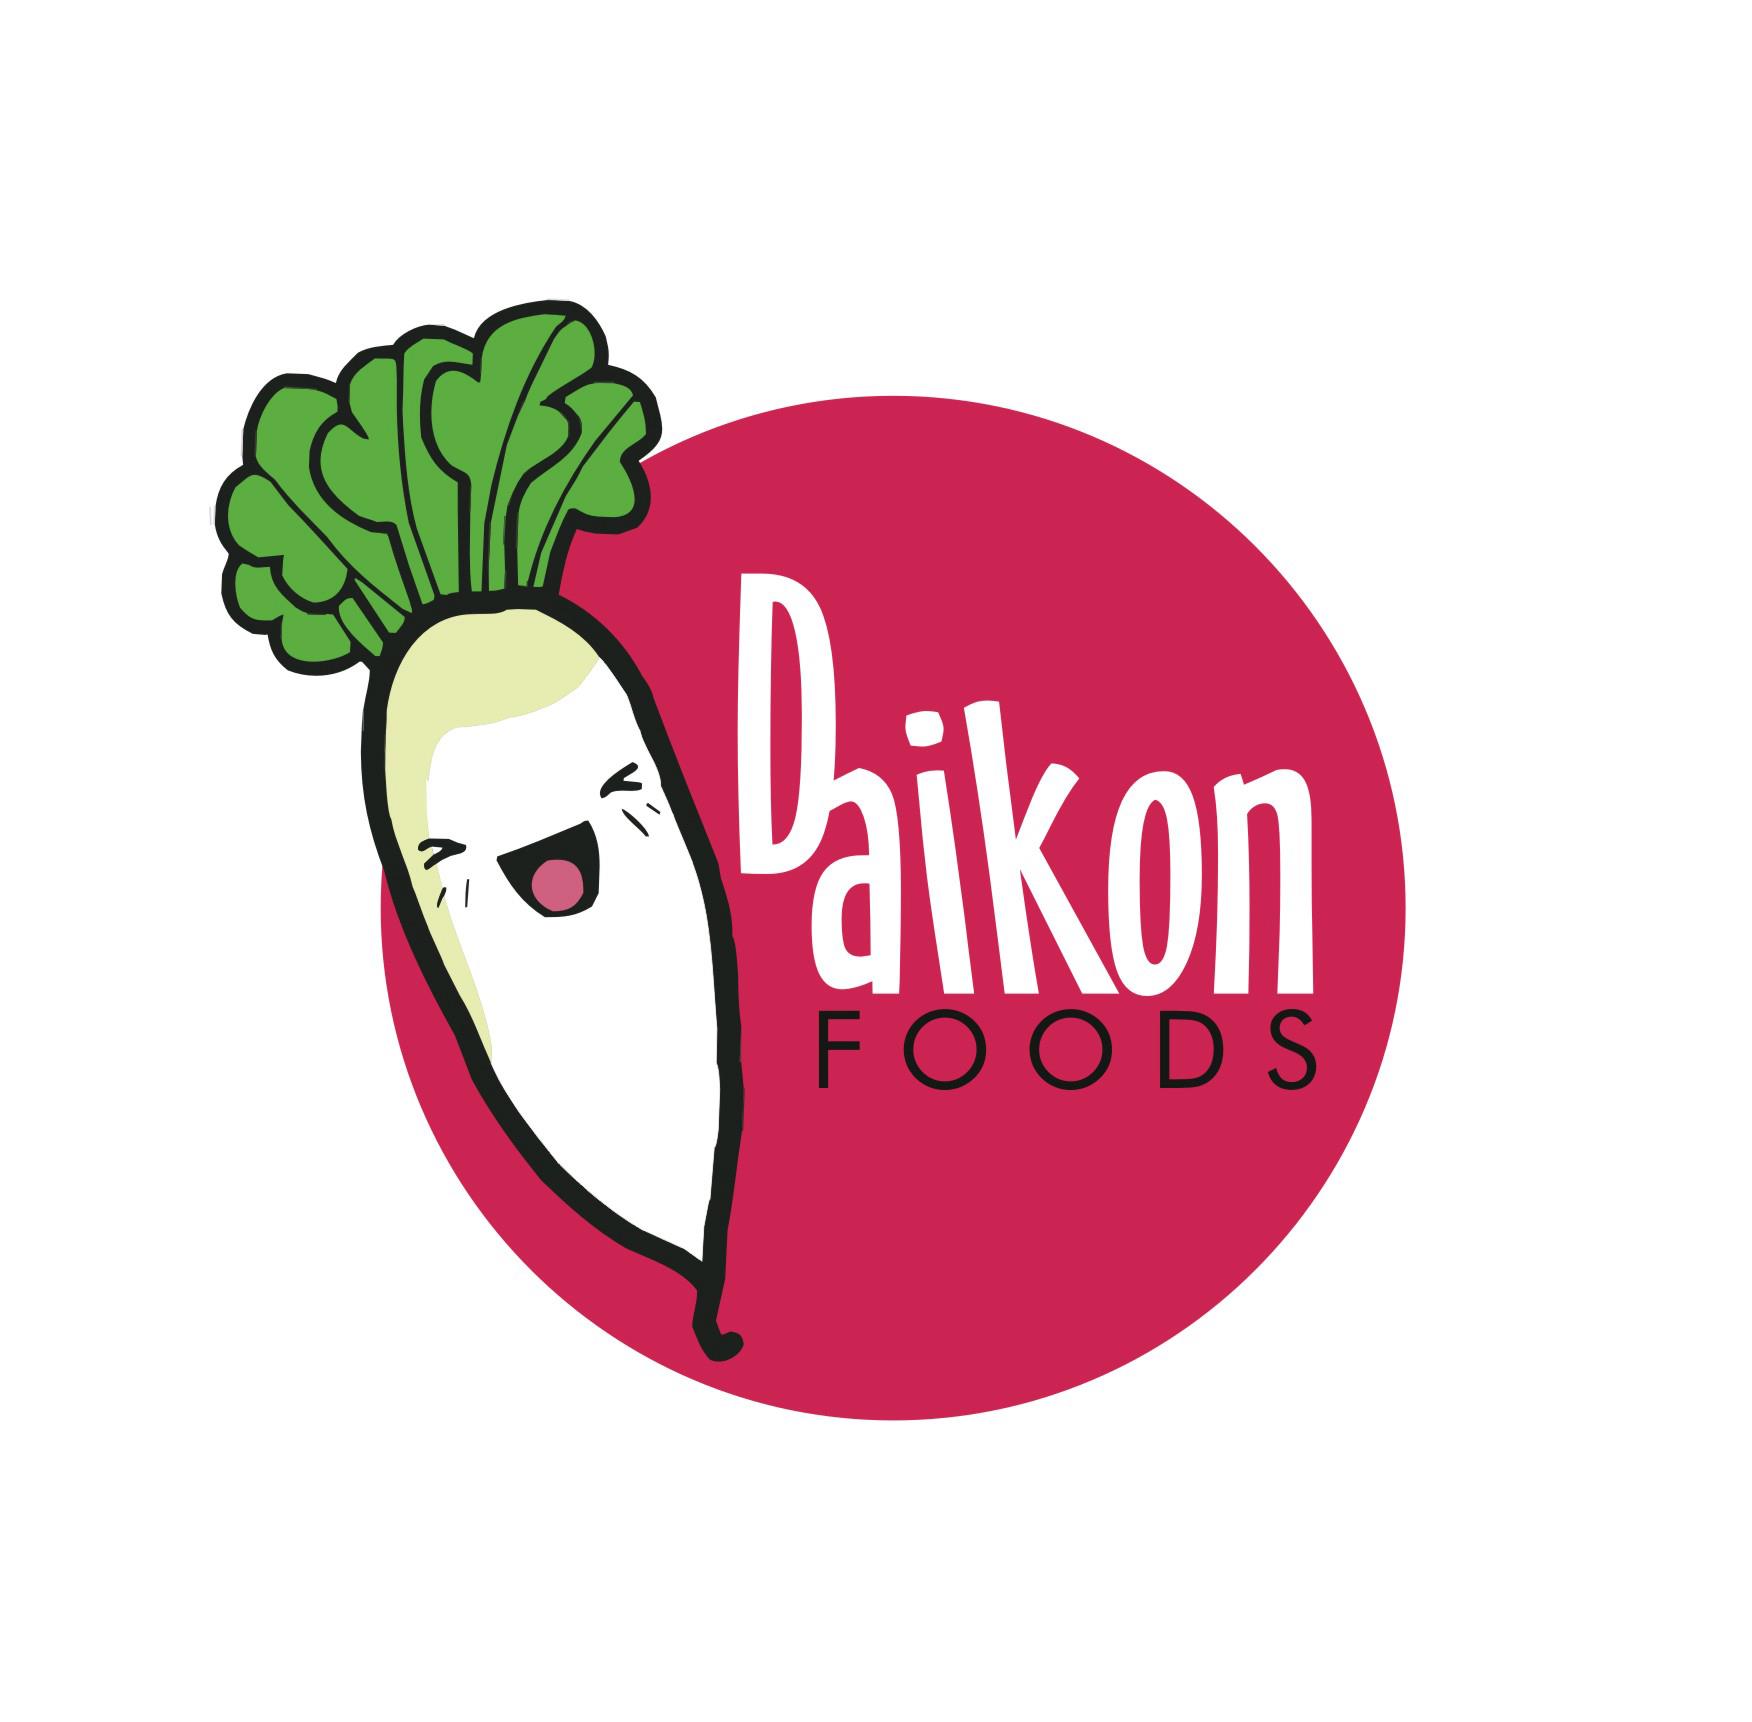 Daikon Foods - Bento Nhật Bản ảnh 2